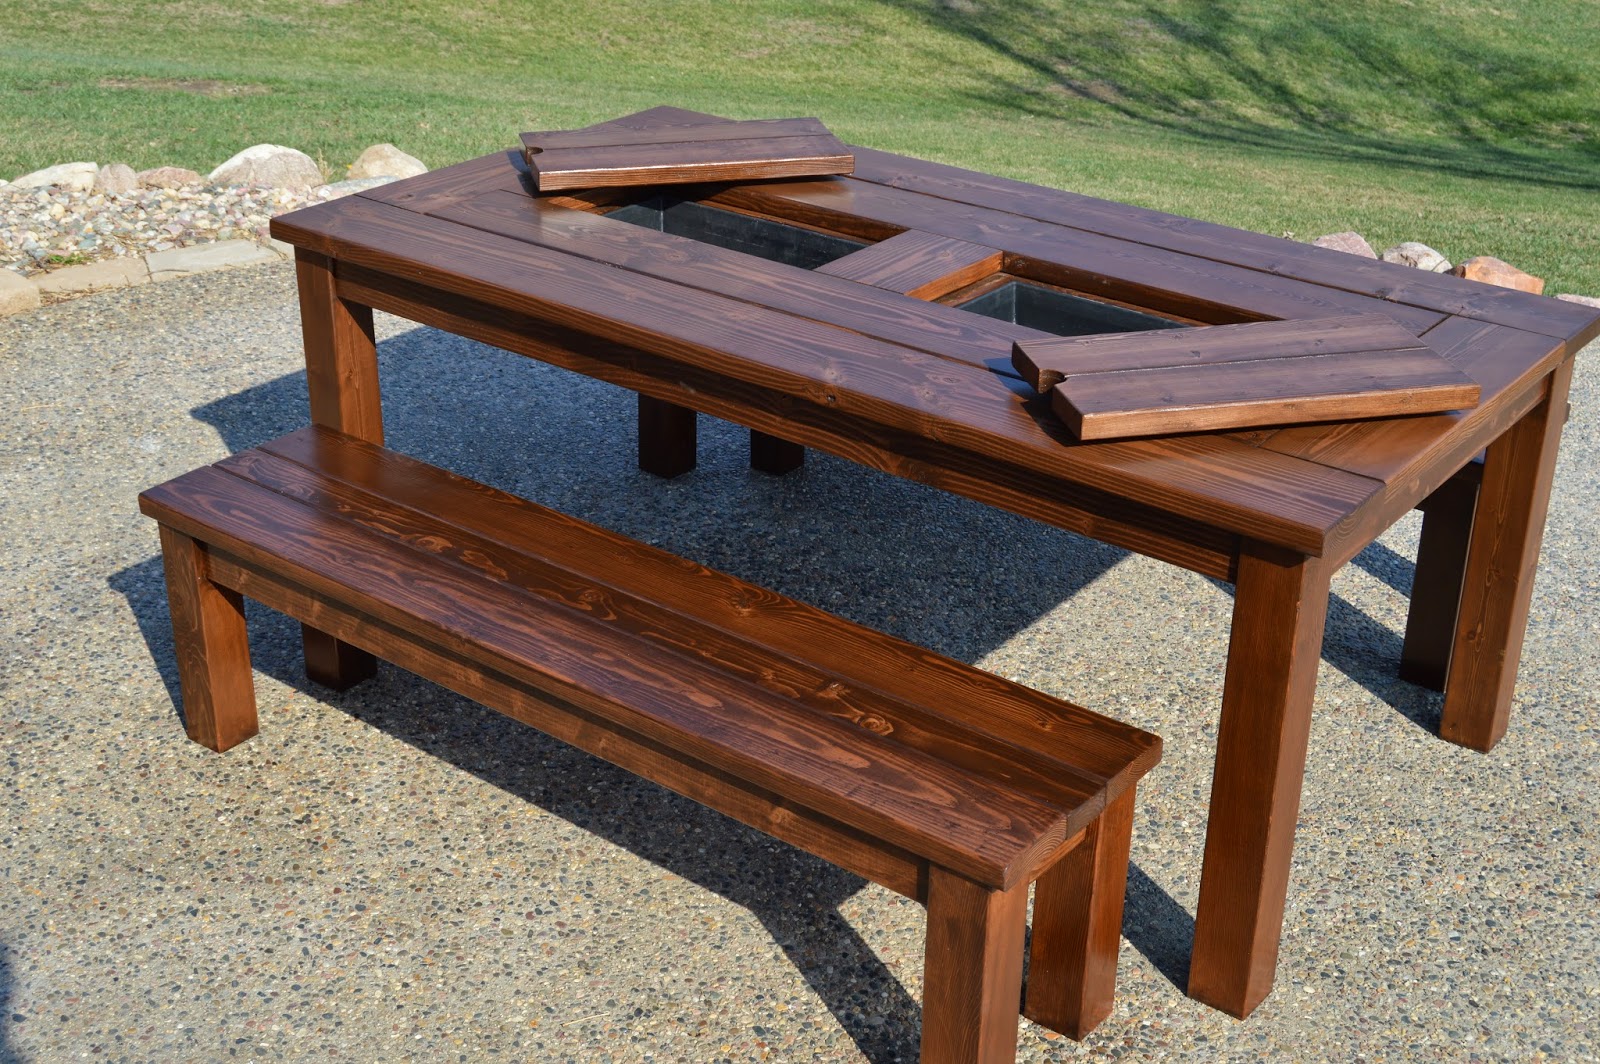  wood desk plans rustic pine furniture bench rustic log bed plans